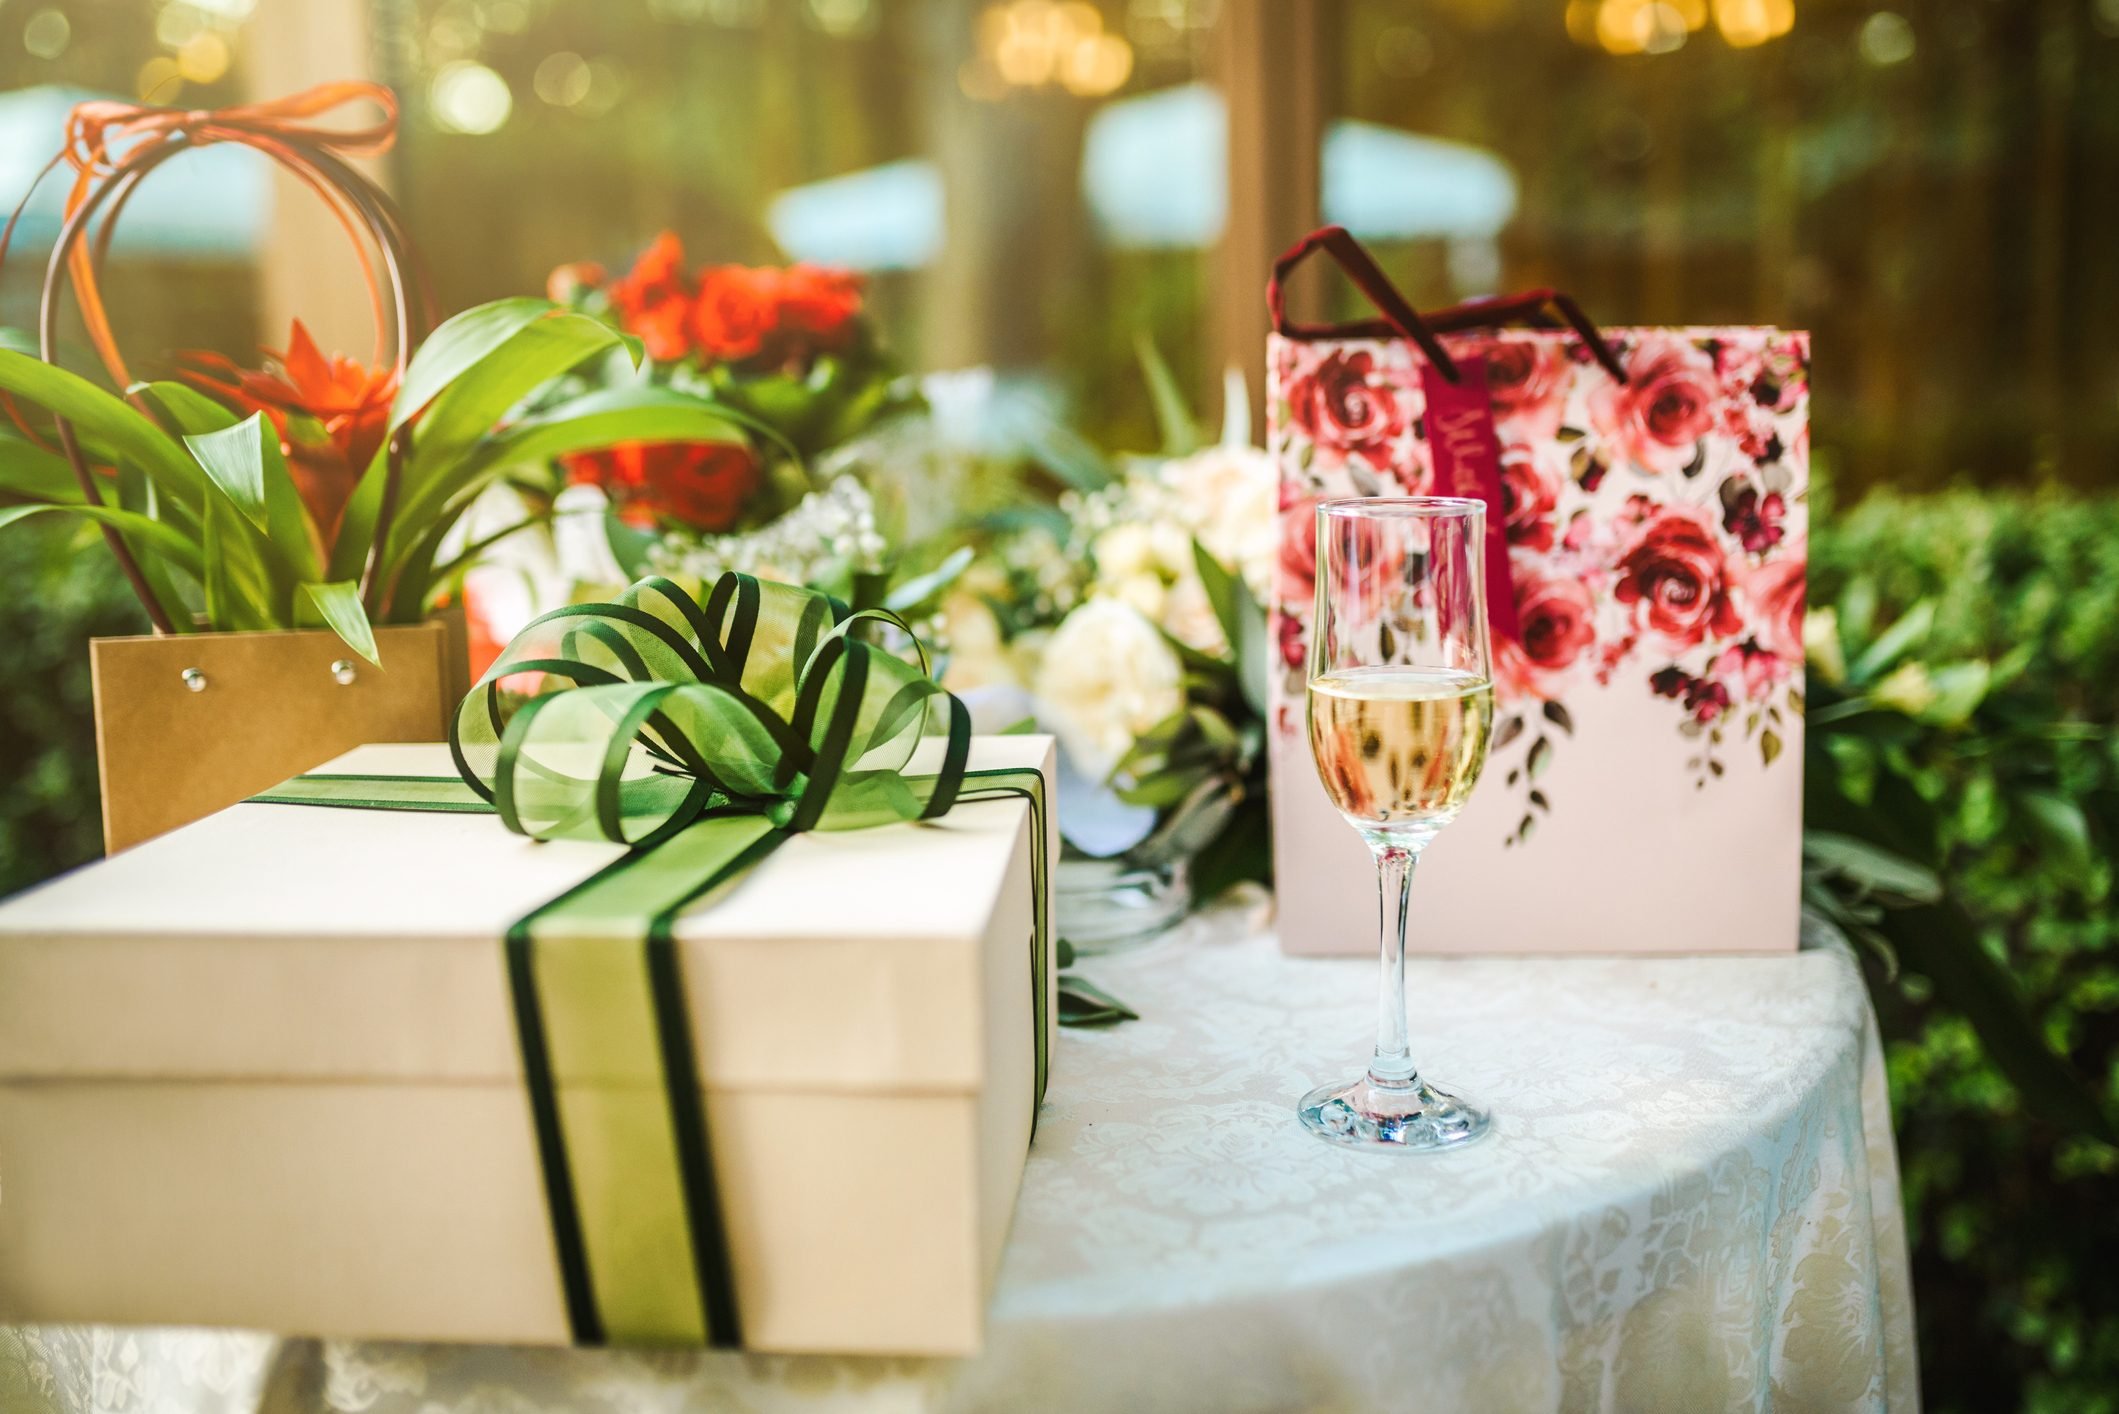 Send Gifts for Bride Online